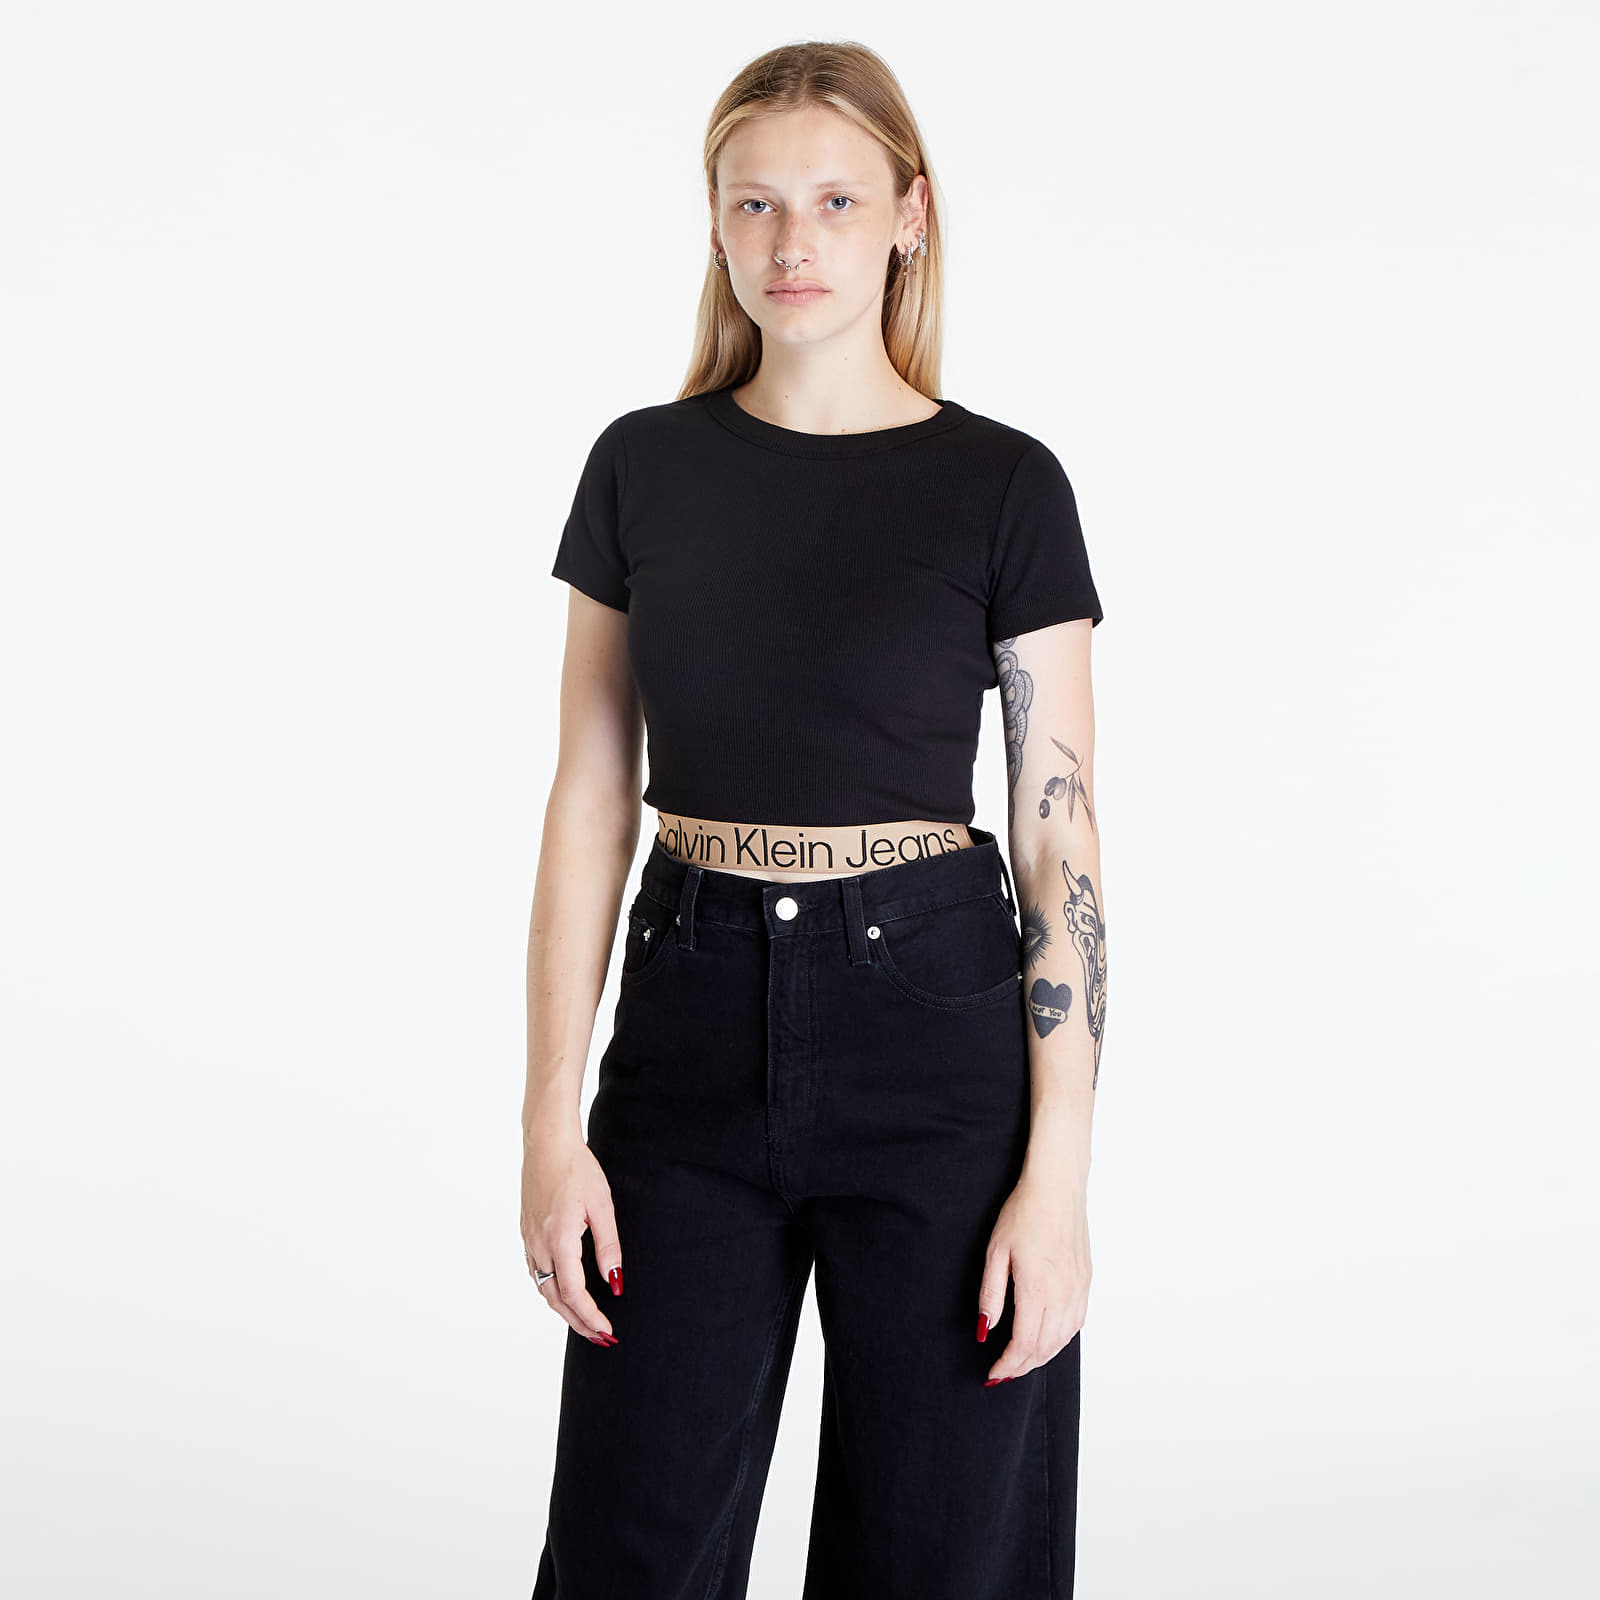 Calvin Klein - jeans logo tape t-shirt black